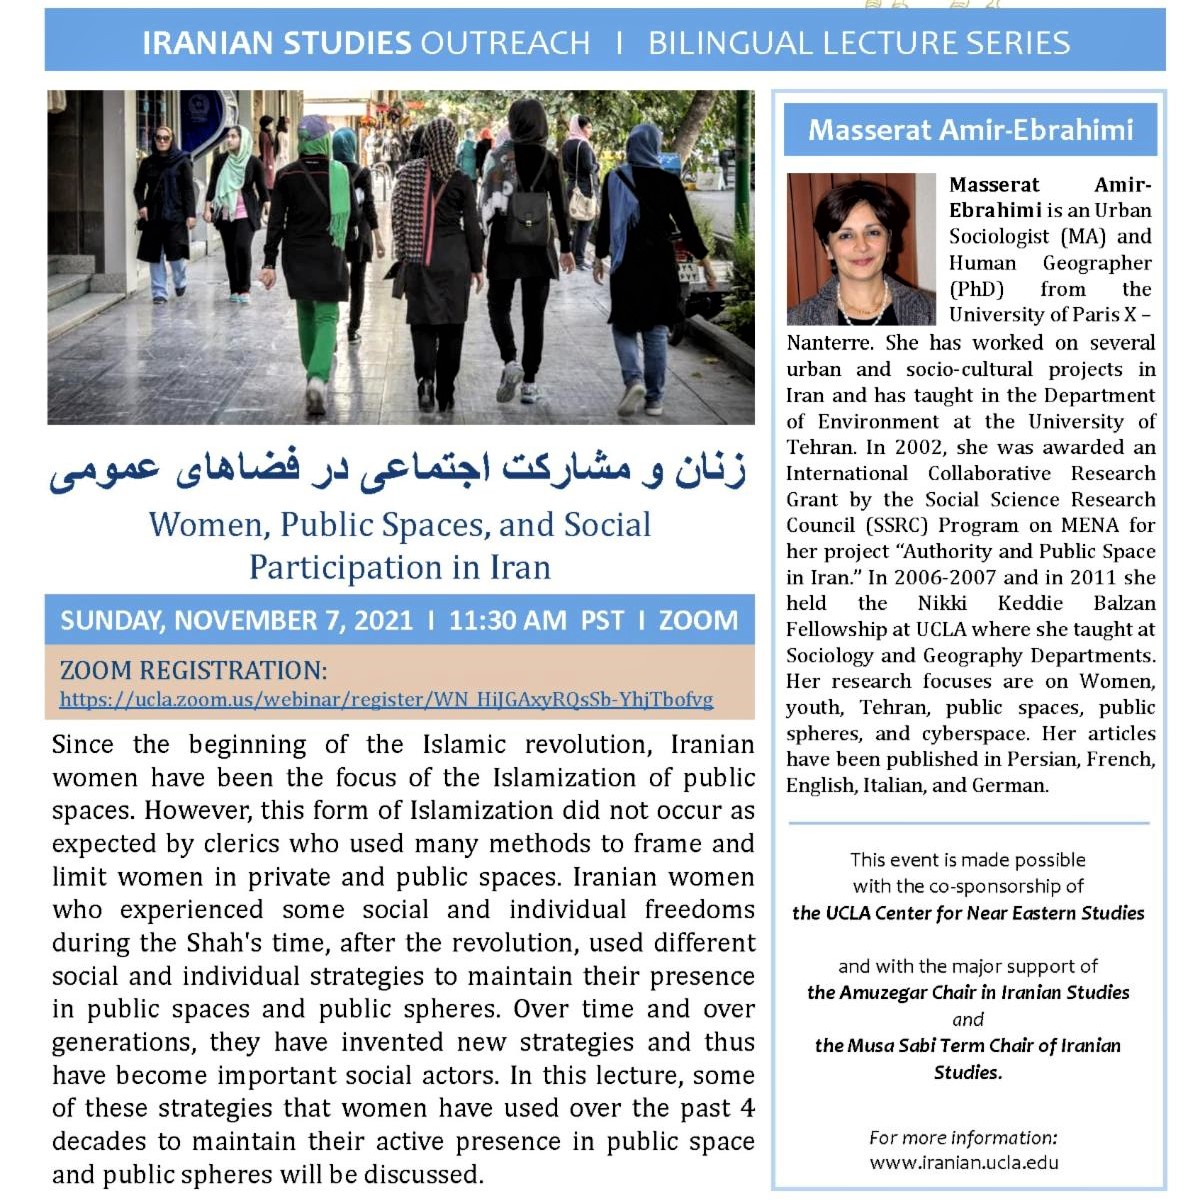 Talk by Dr. Masserat Amir-Ebrahimi: The talk's flyer